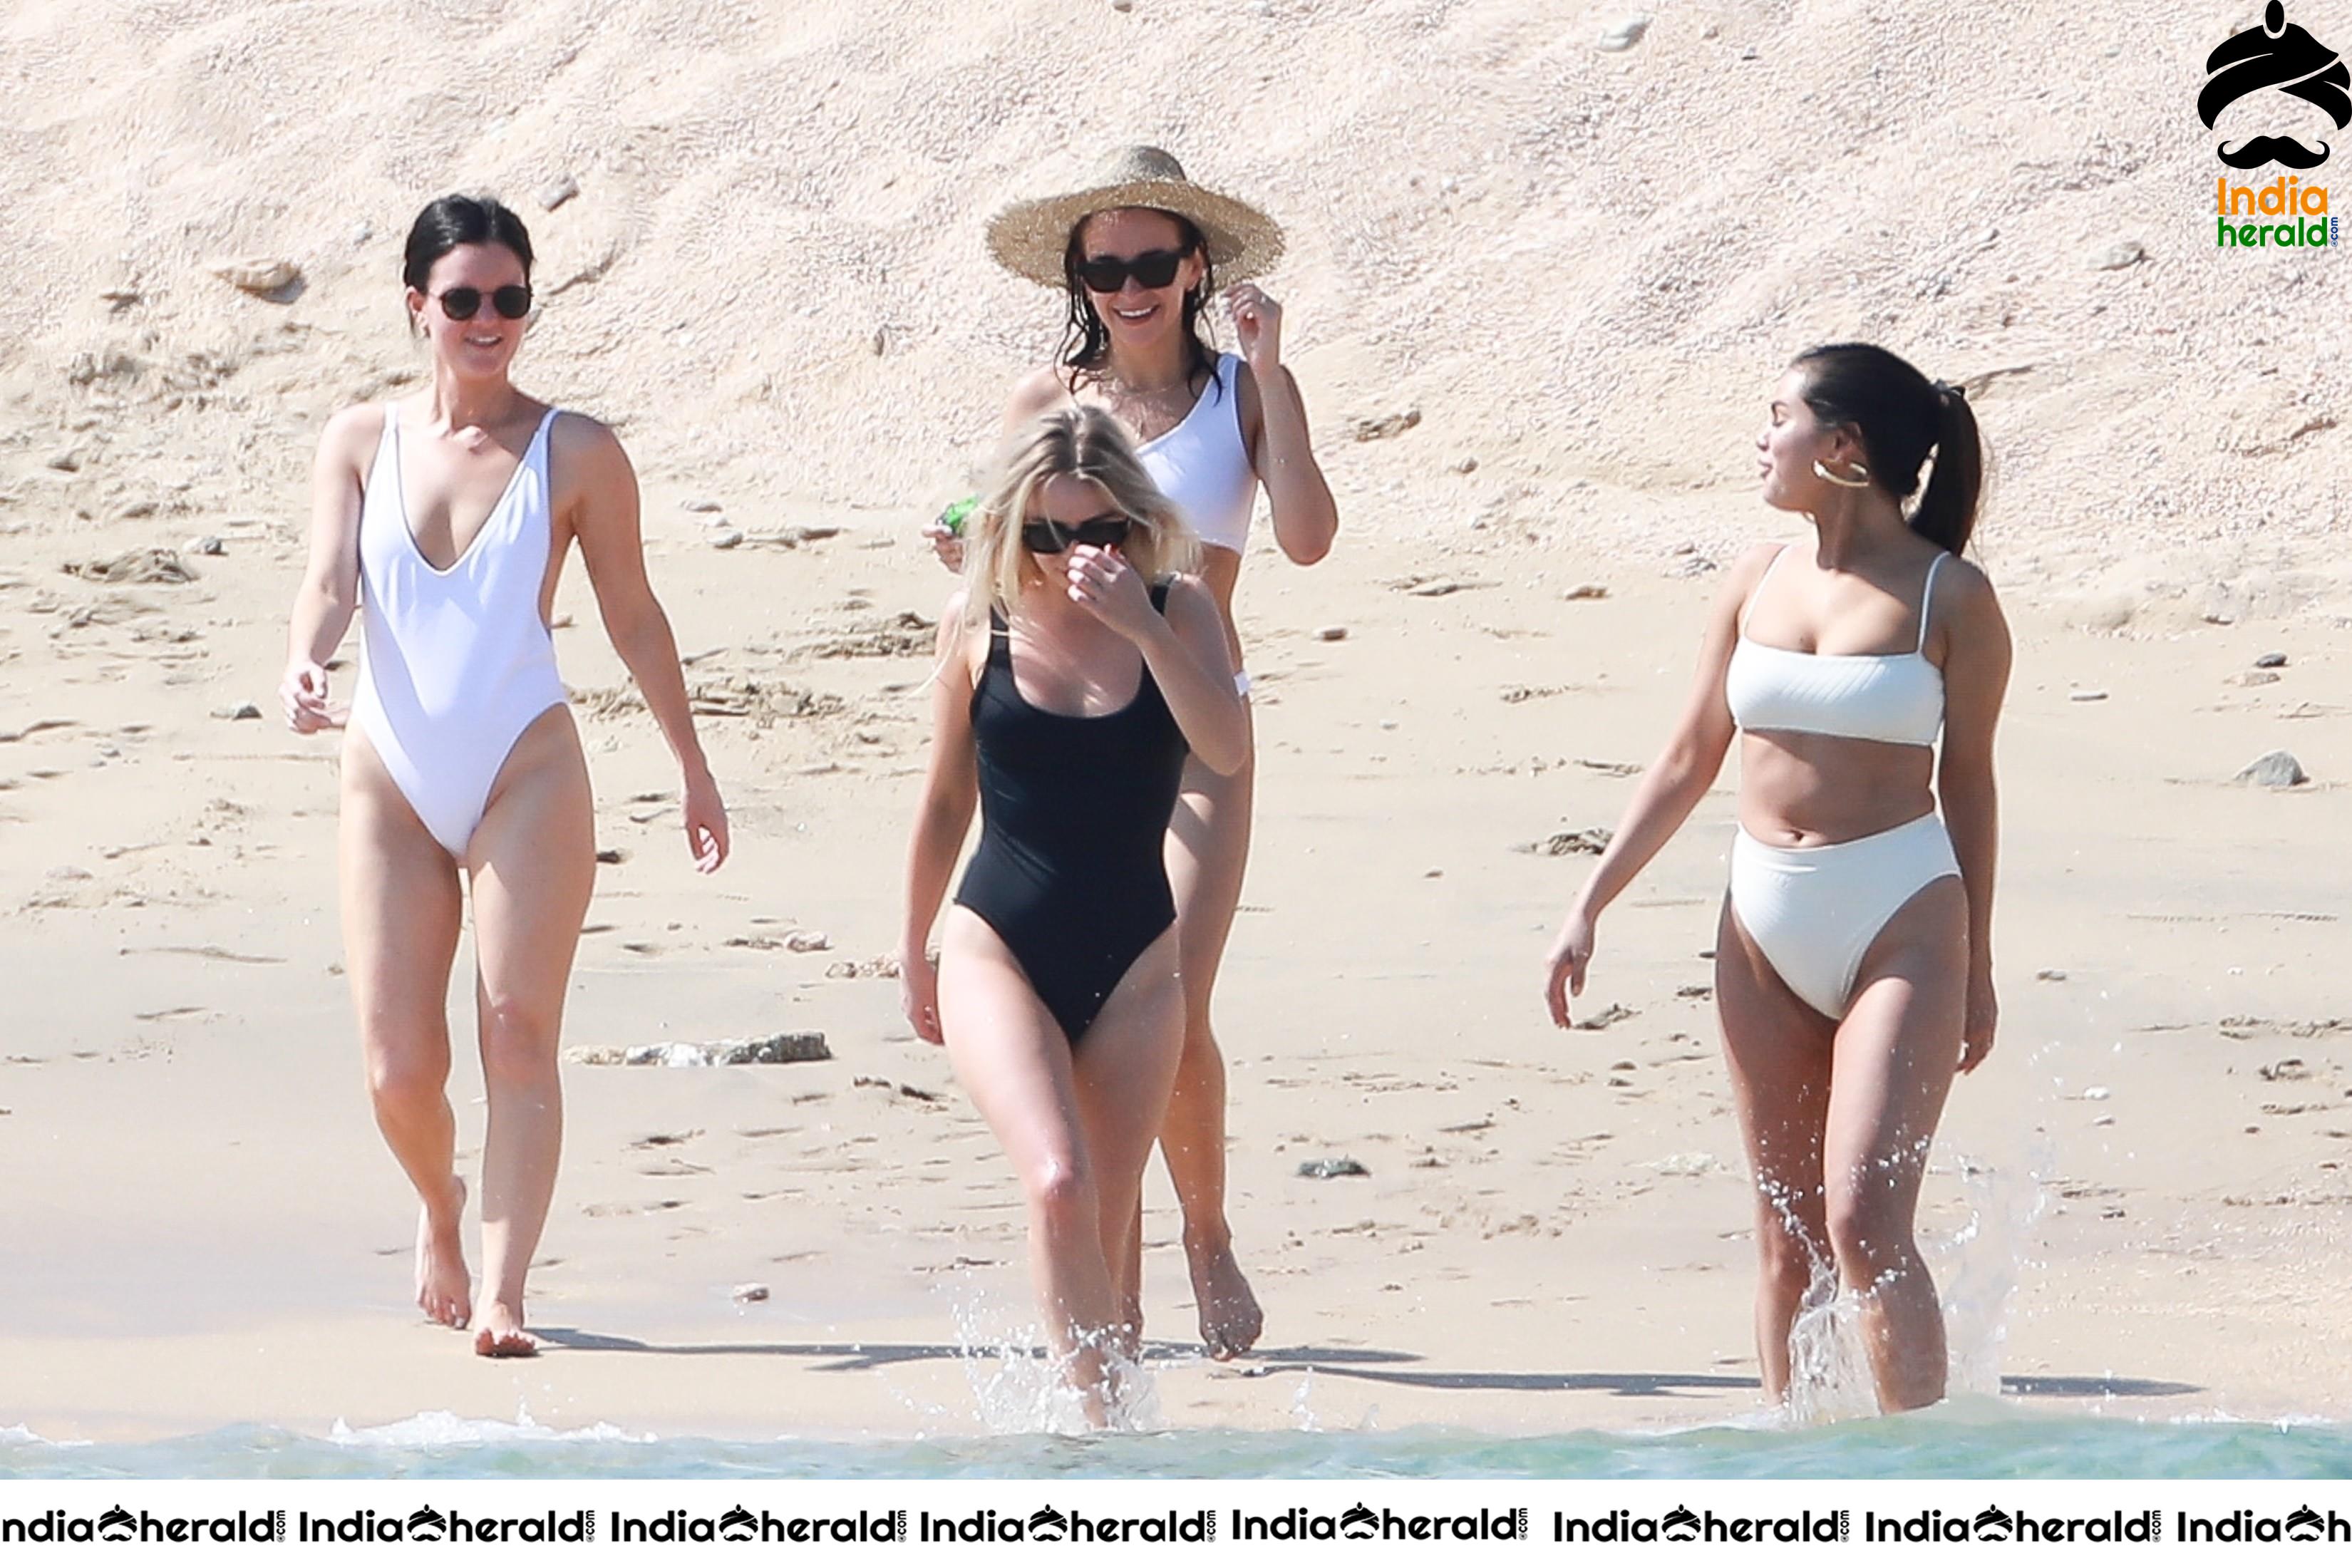 Selena Gomez Wearing A Bikini With Friends In A Beach Set 2